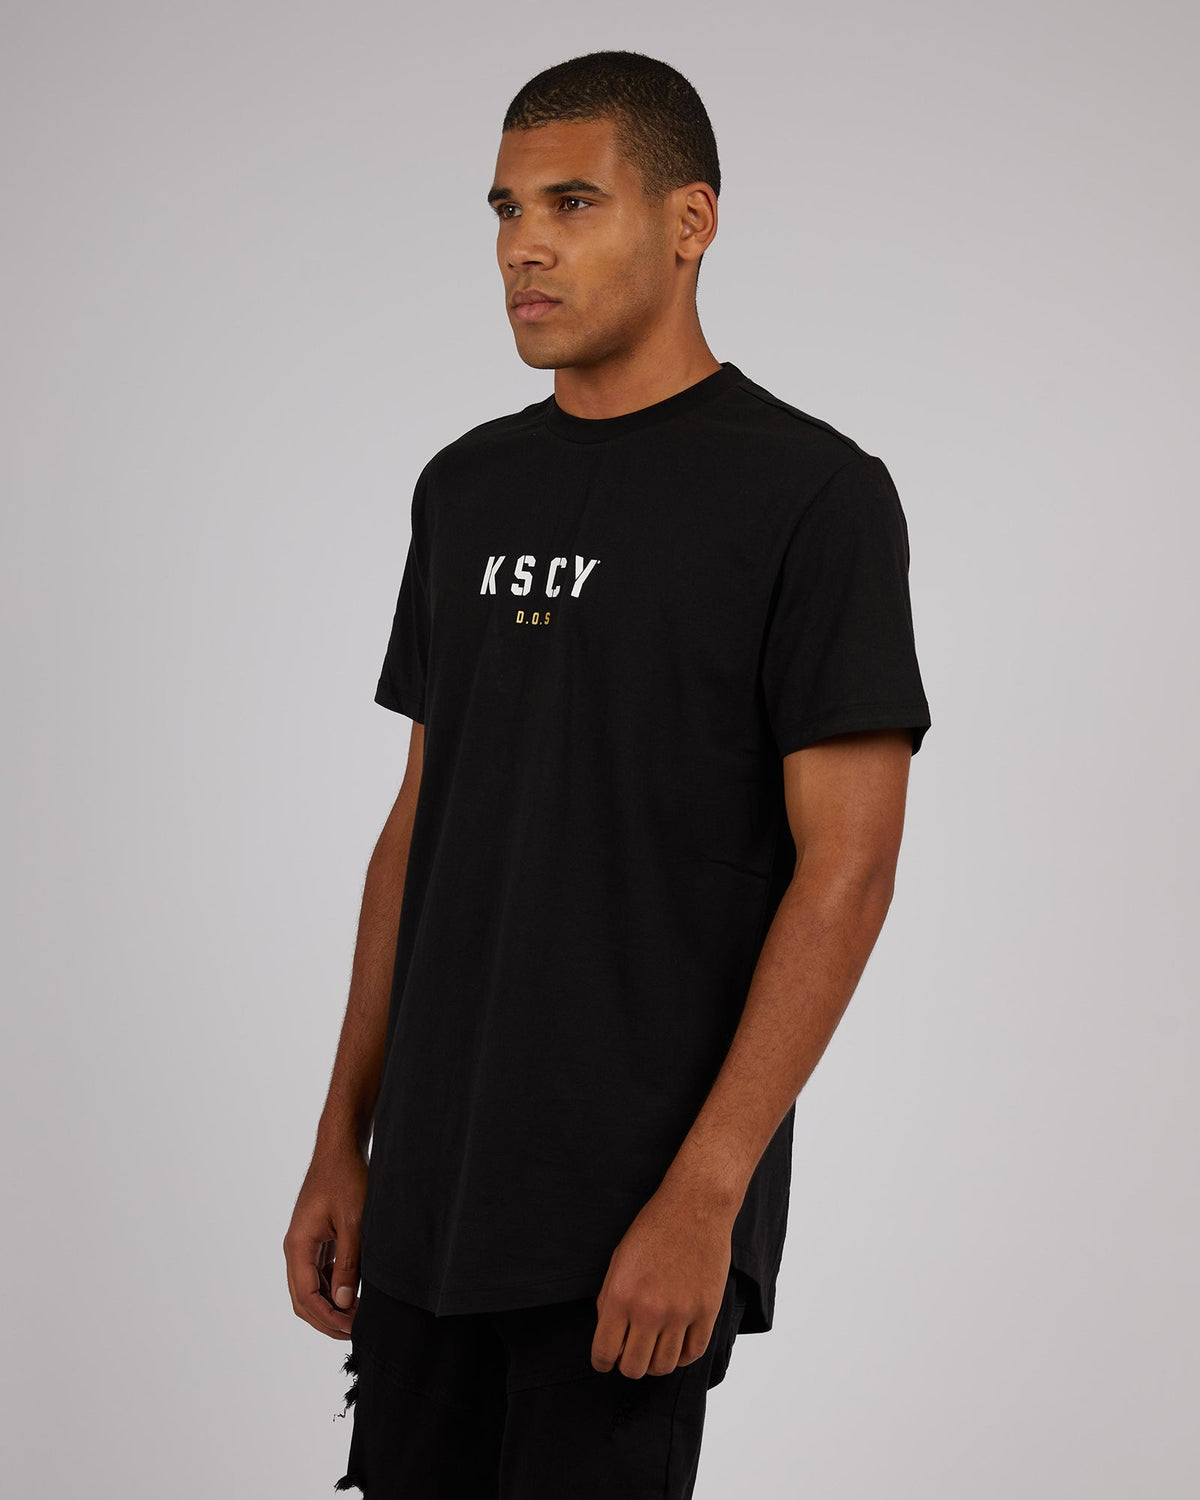 Kiss Chacey-Lambert Tee Jet Black-Edge Clothing